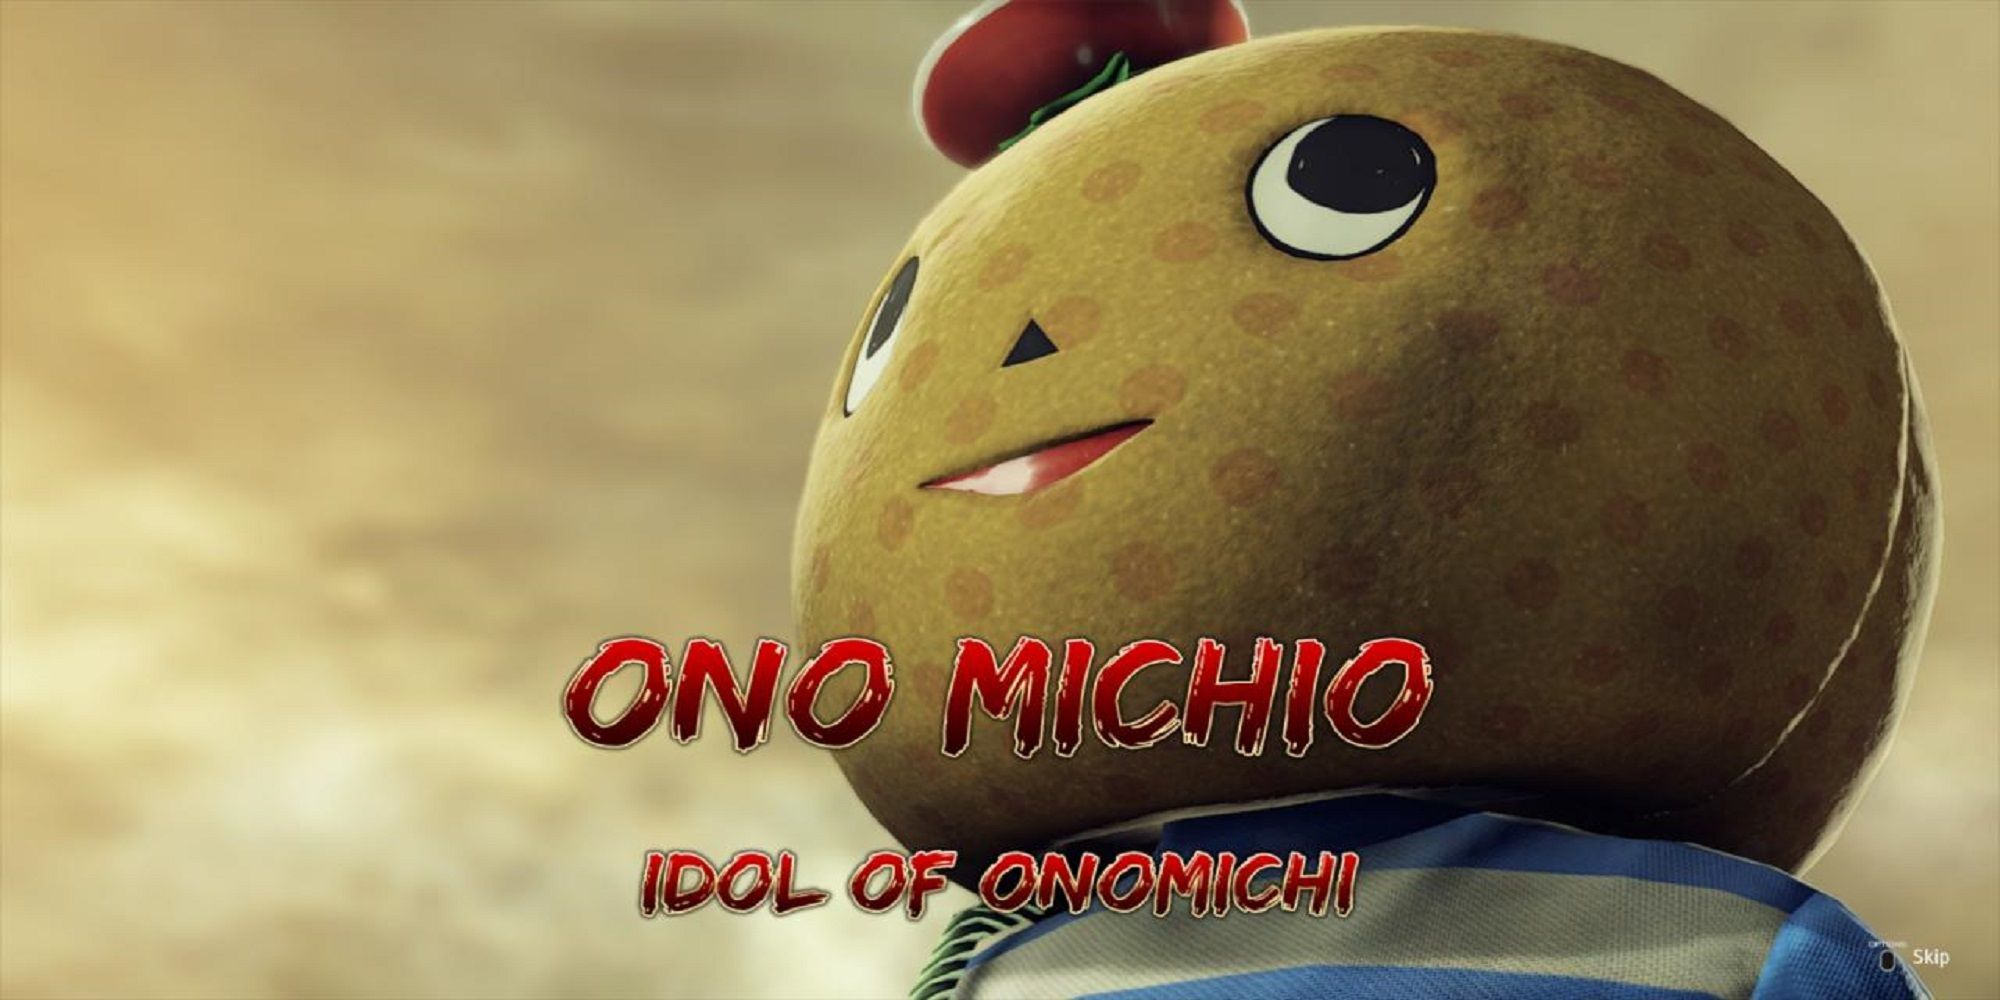 closeup of ono michio summon, titles written on screen